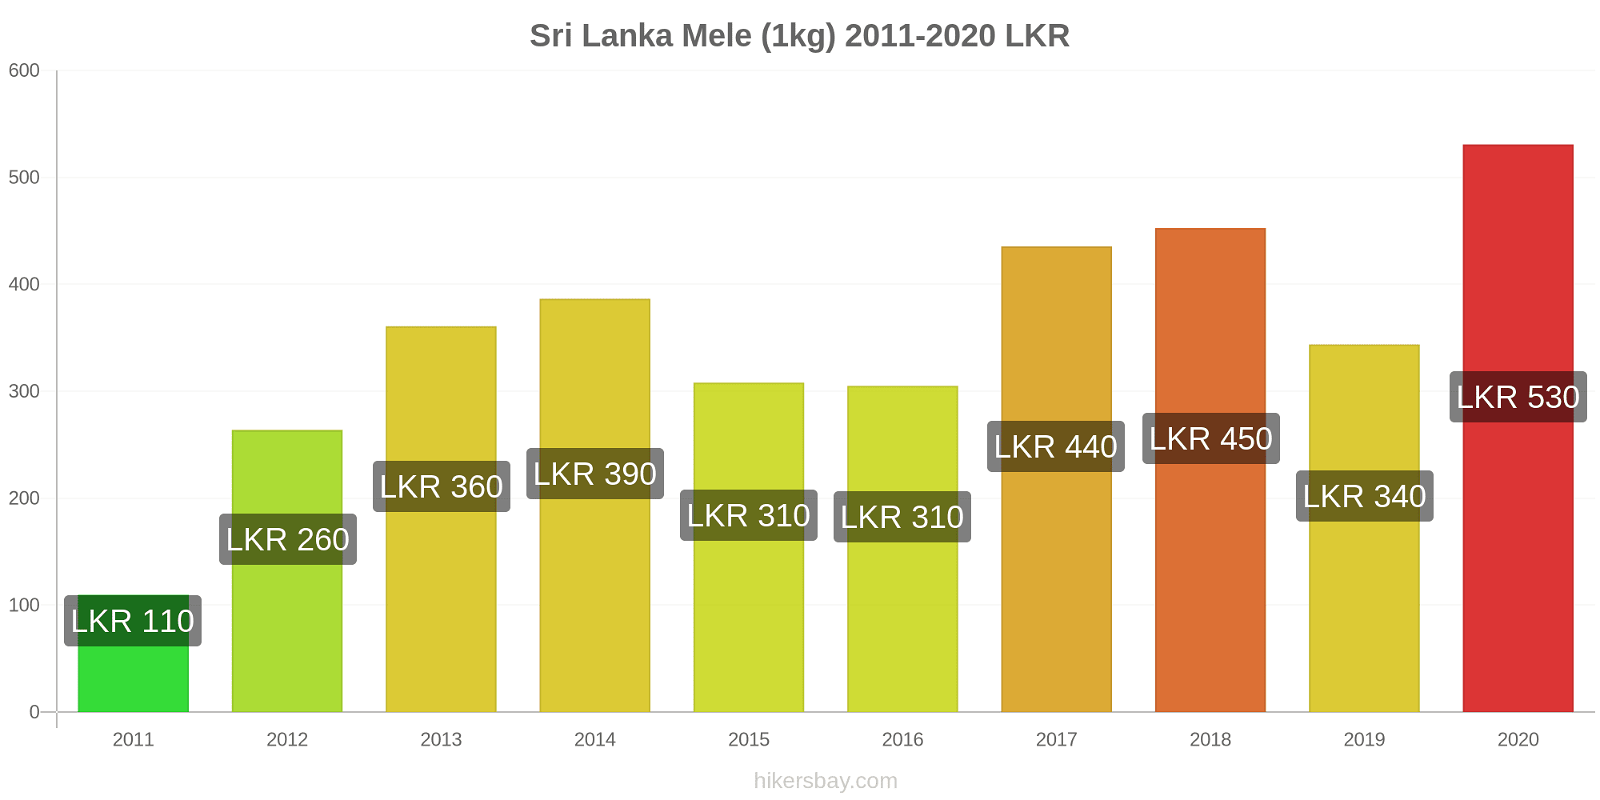 Sri Lanka variazioni di prezzo Mele (1kg) hikersbay.com